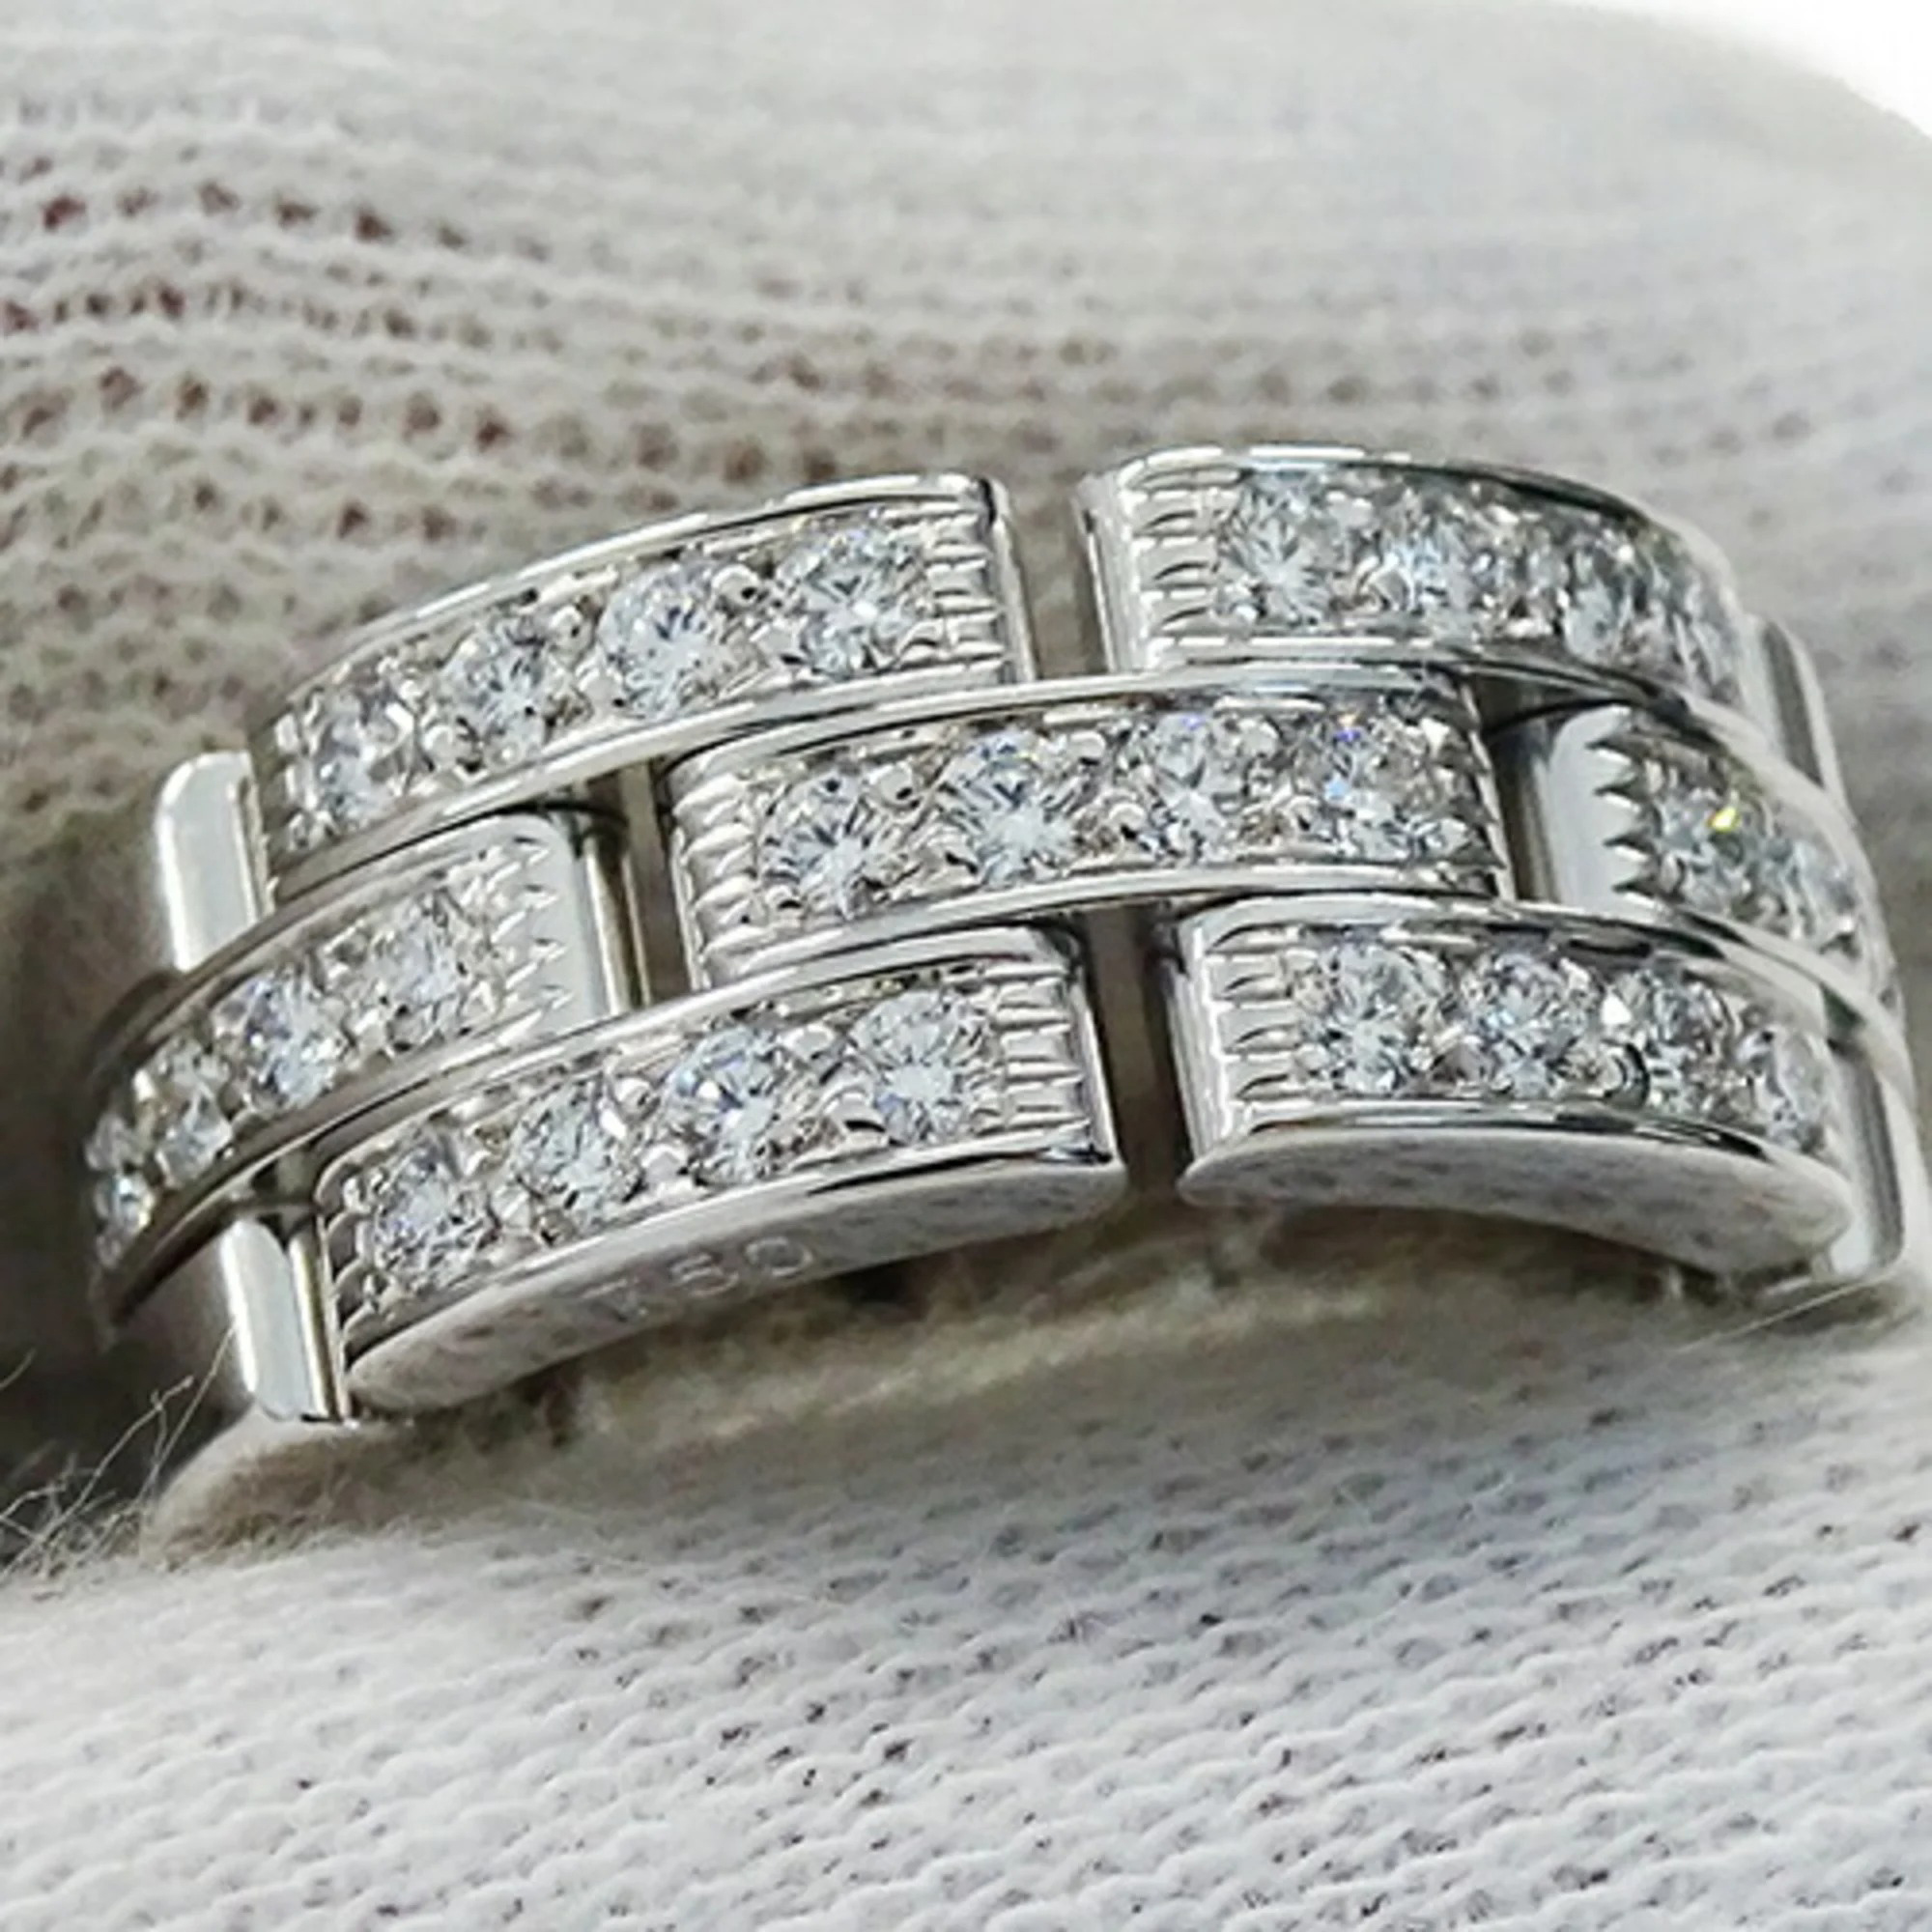 Cartier Mallion Panthere 18K White Gold Diamond Ring EU 50